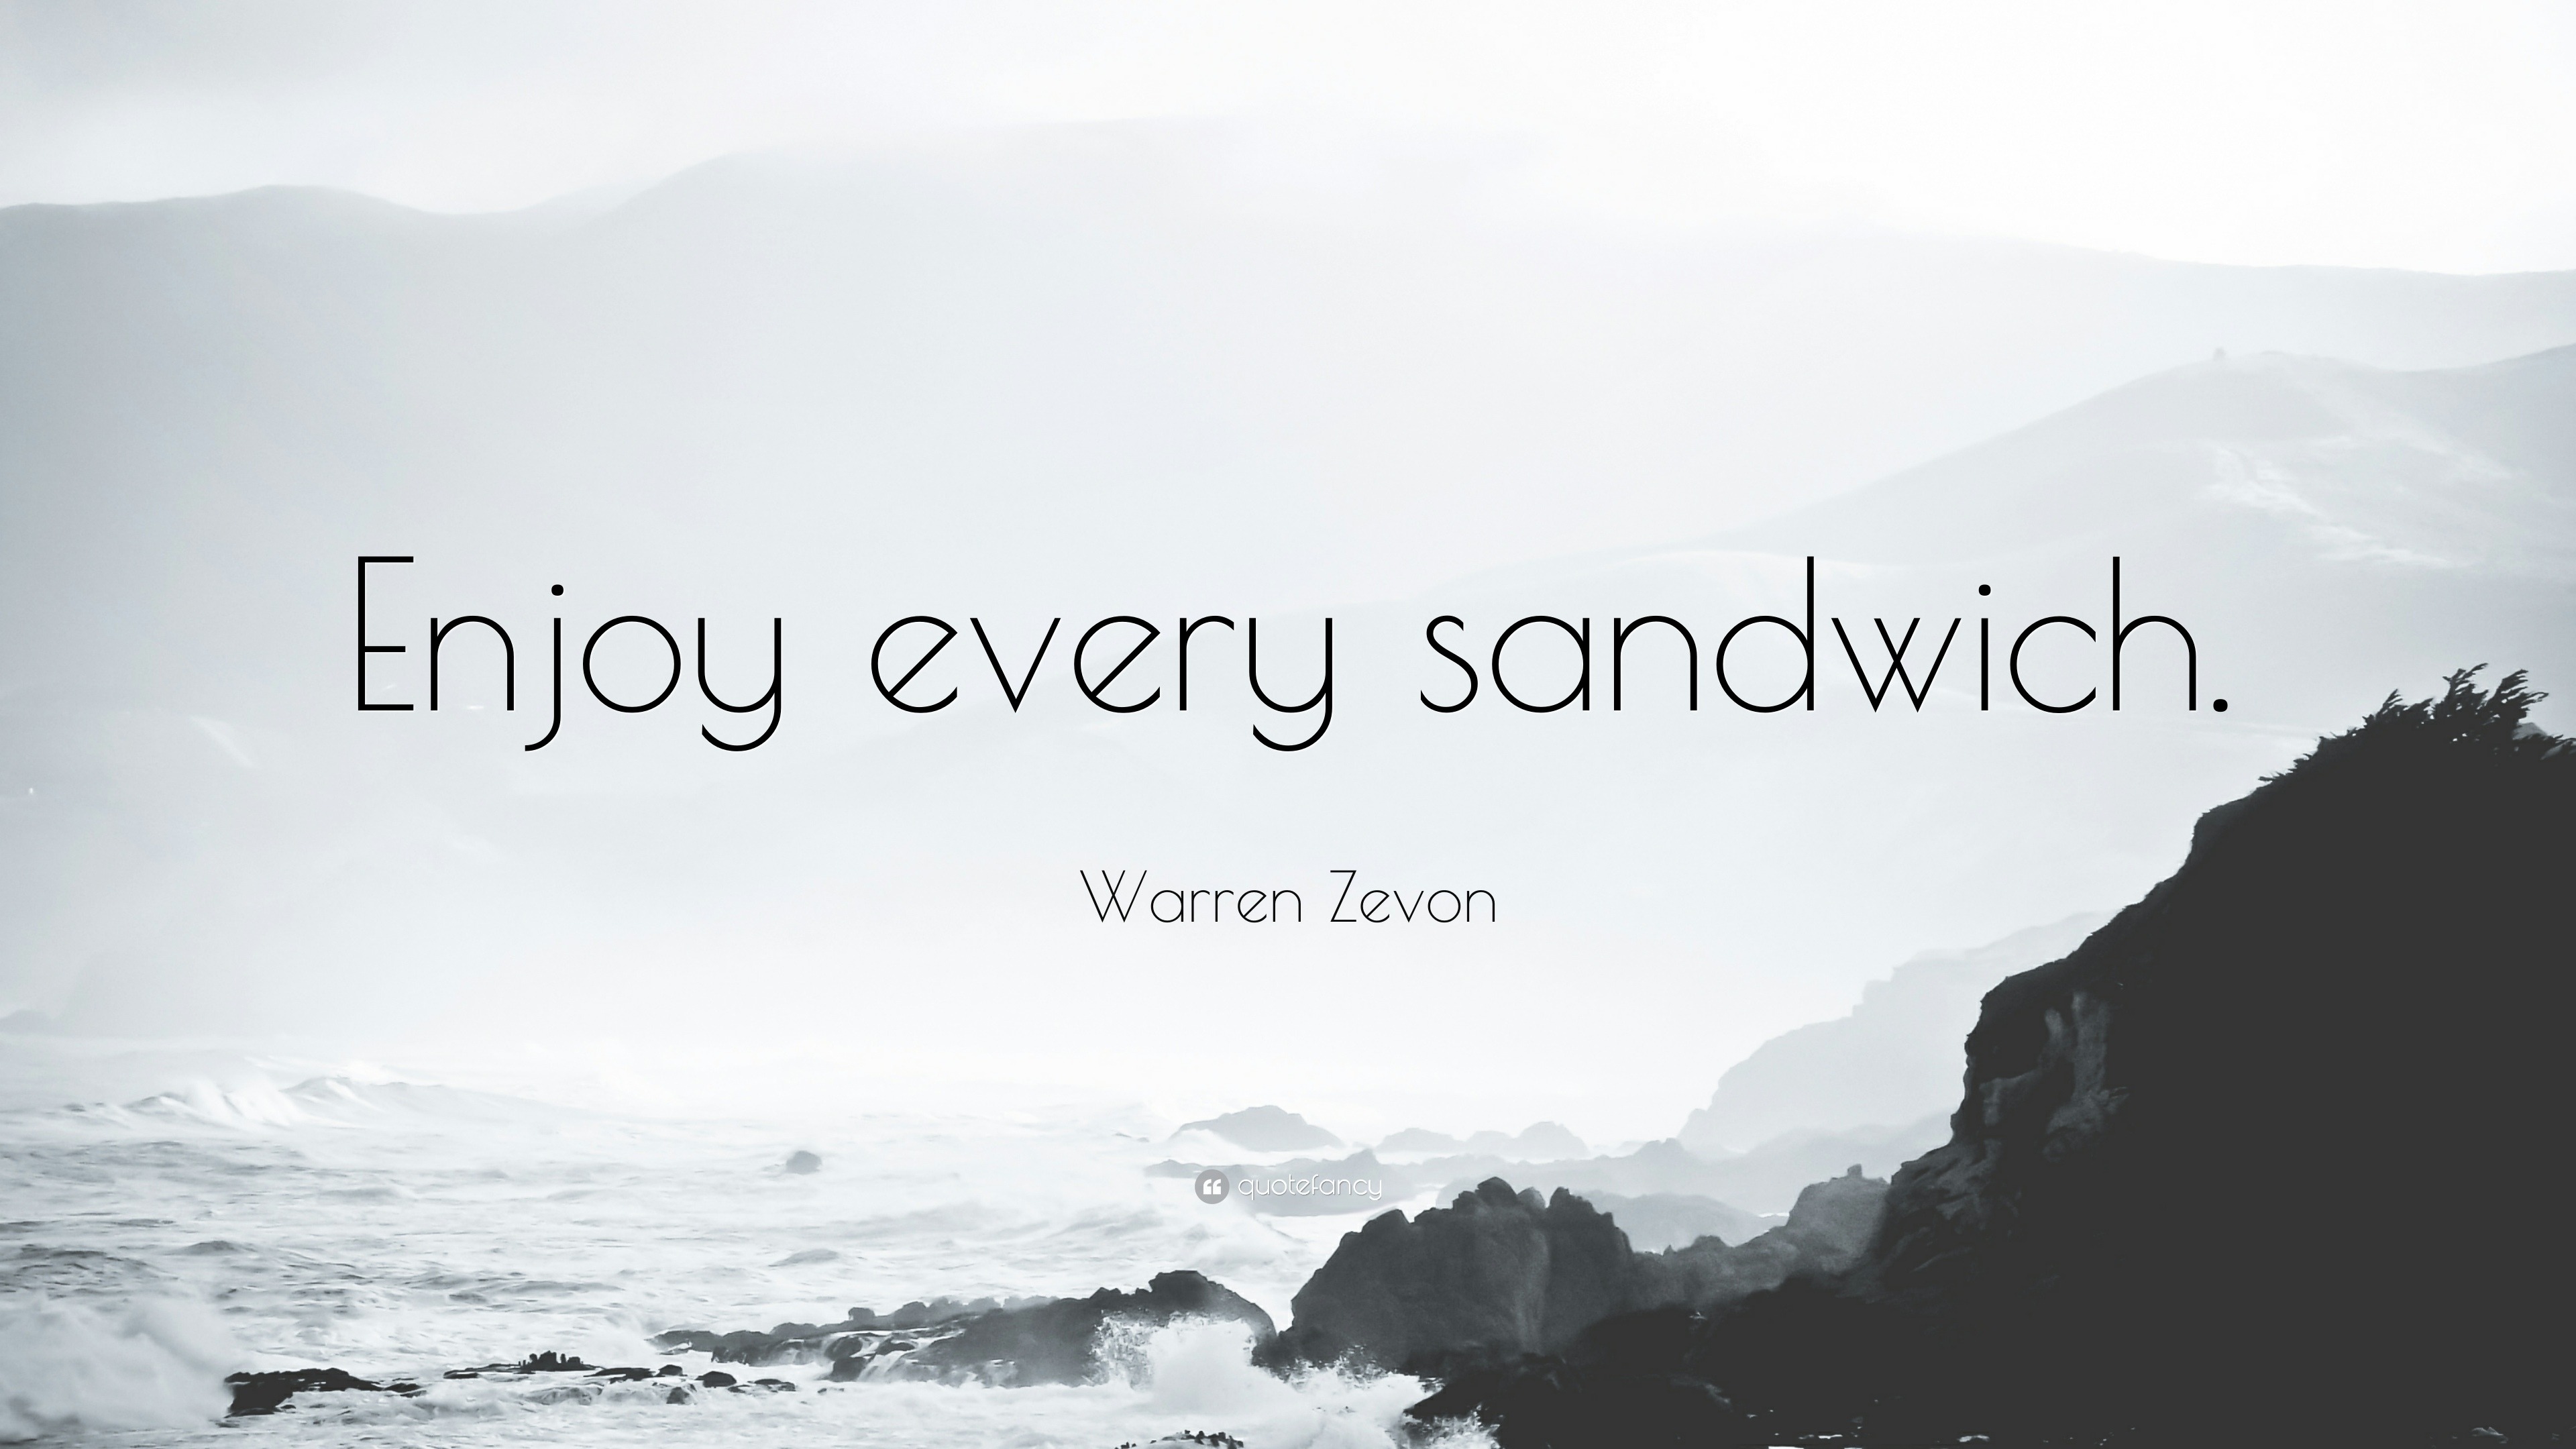 warren zevon enjoy every sandwich album